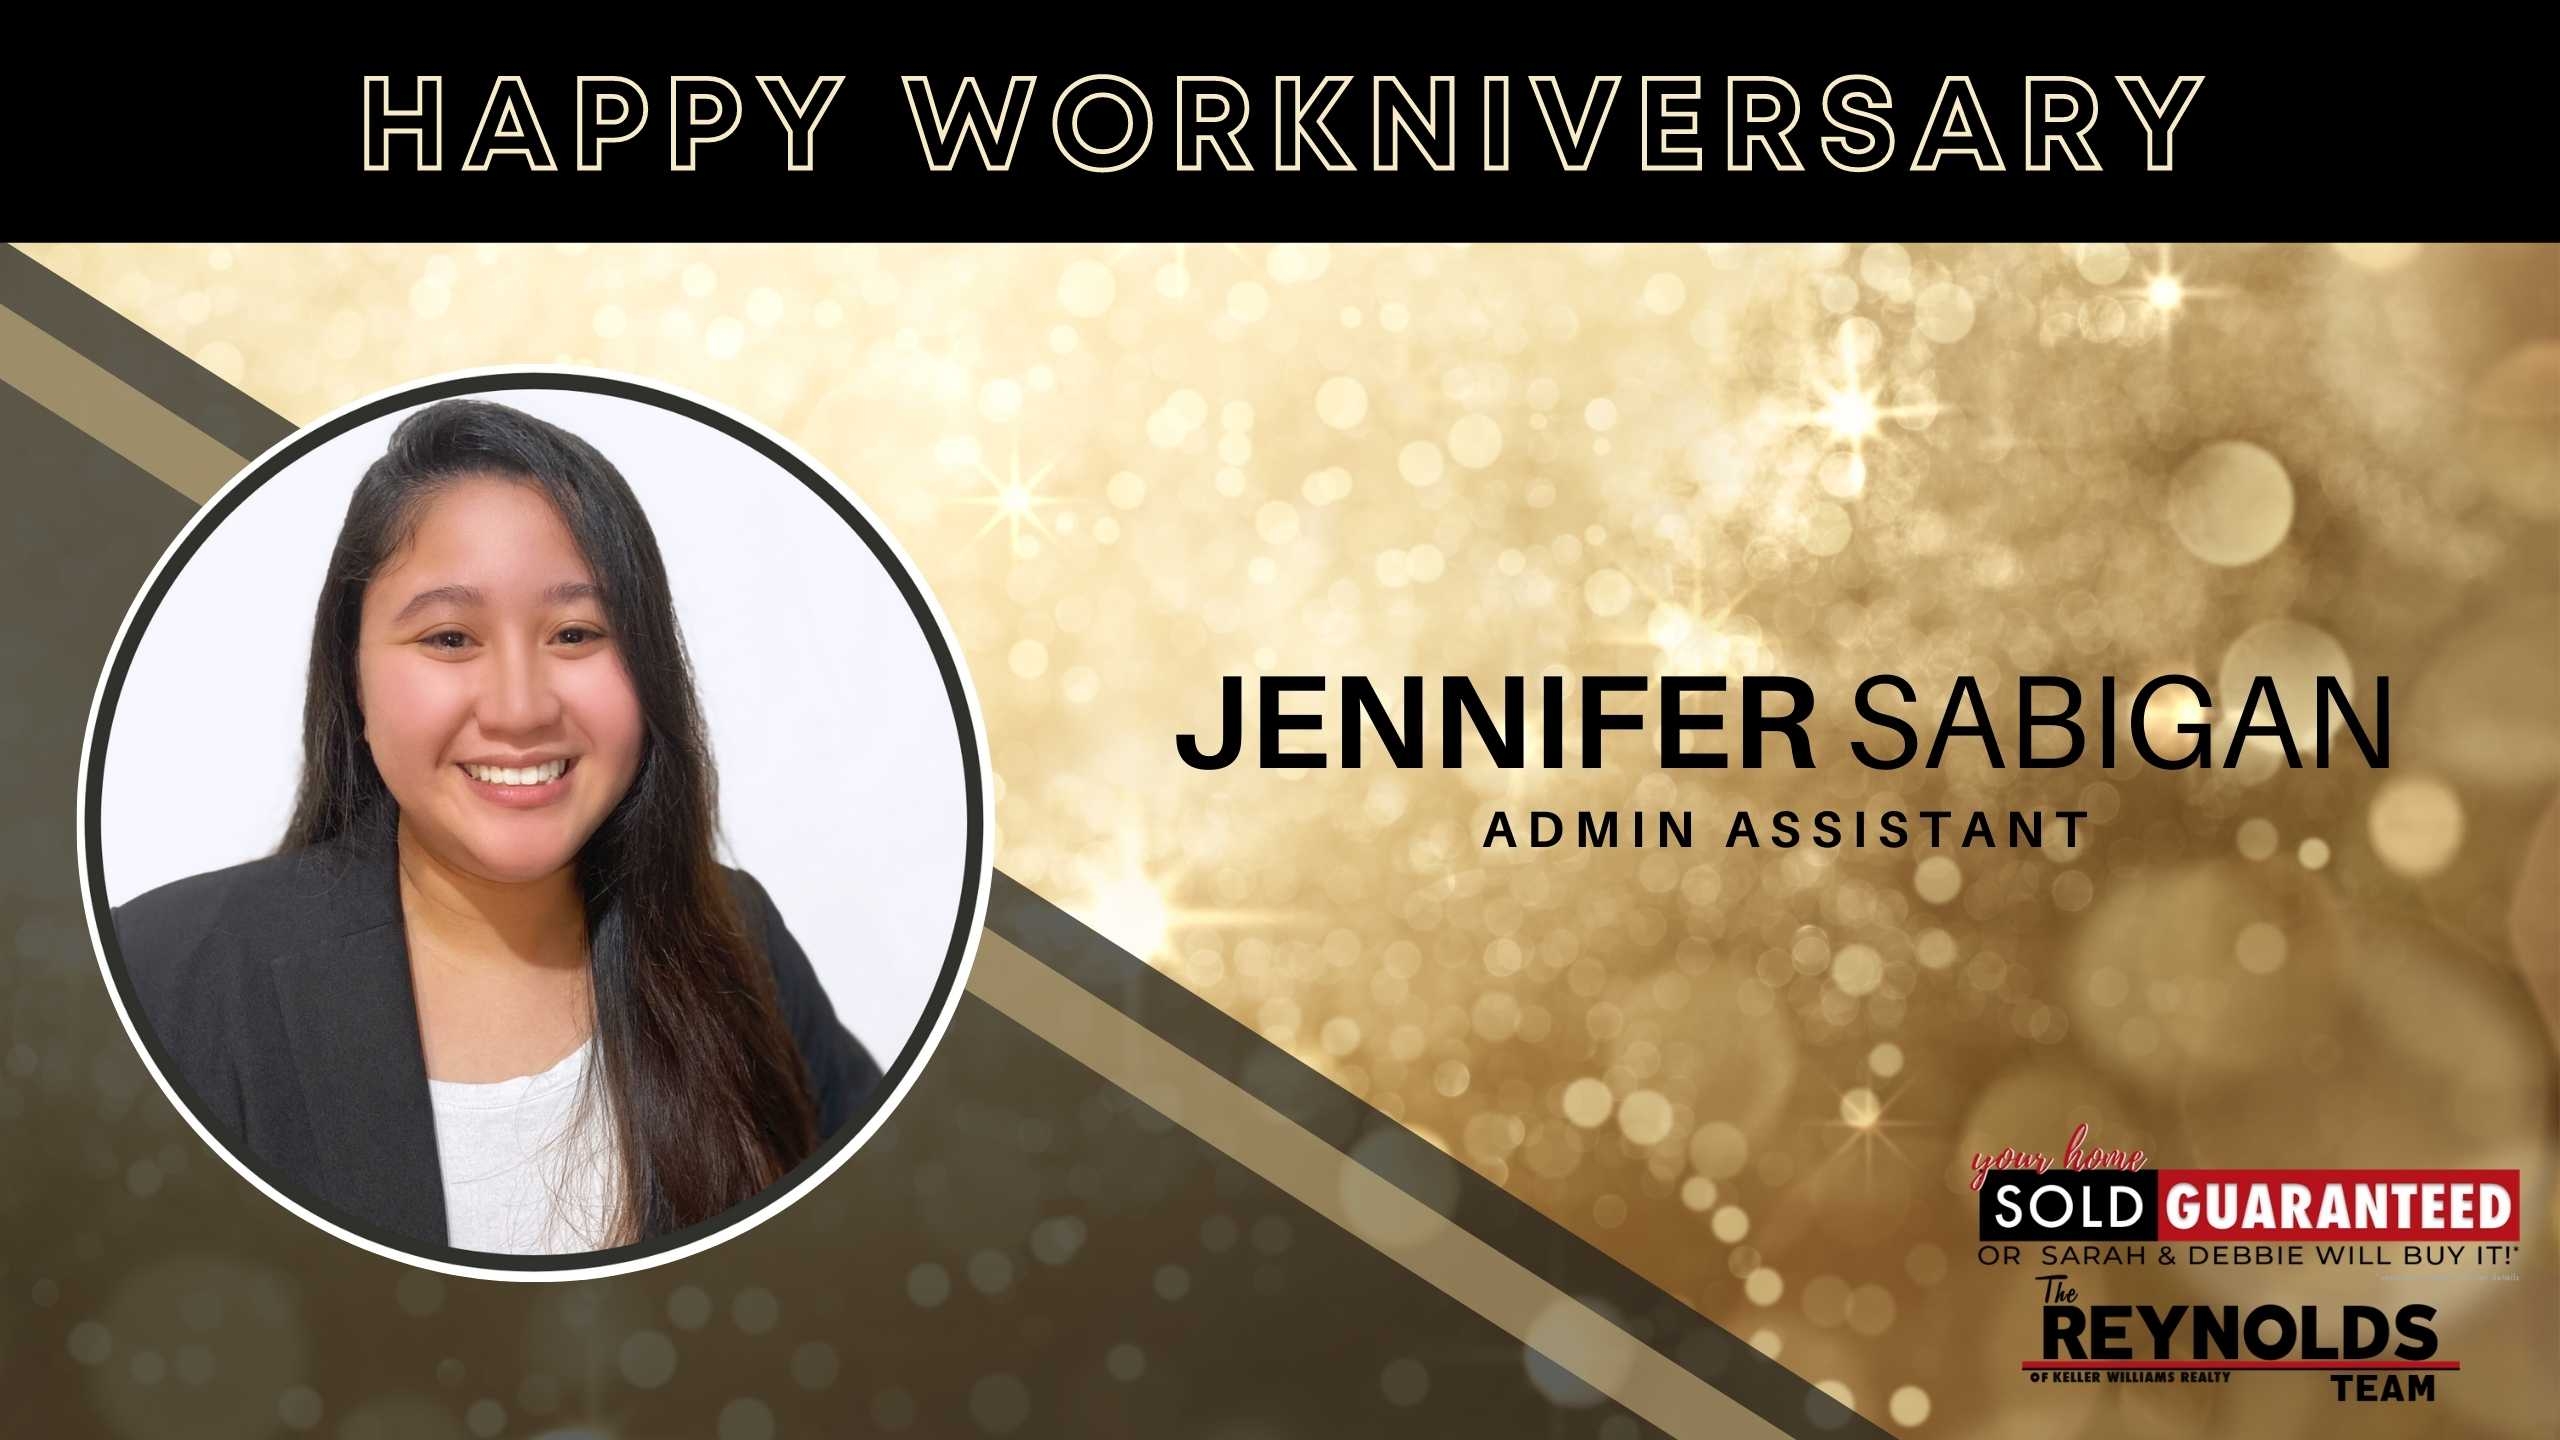 Happy Workniversary Jennifer!